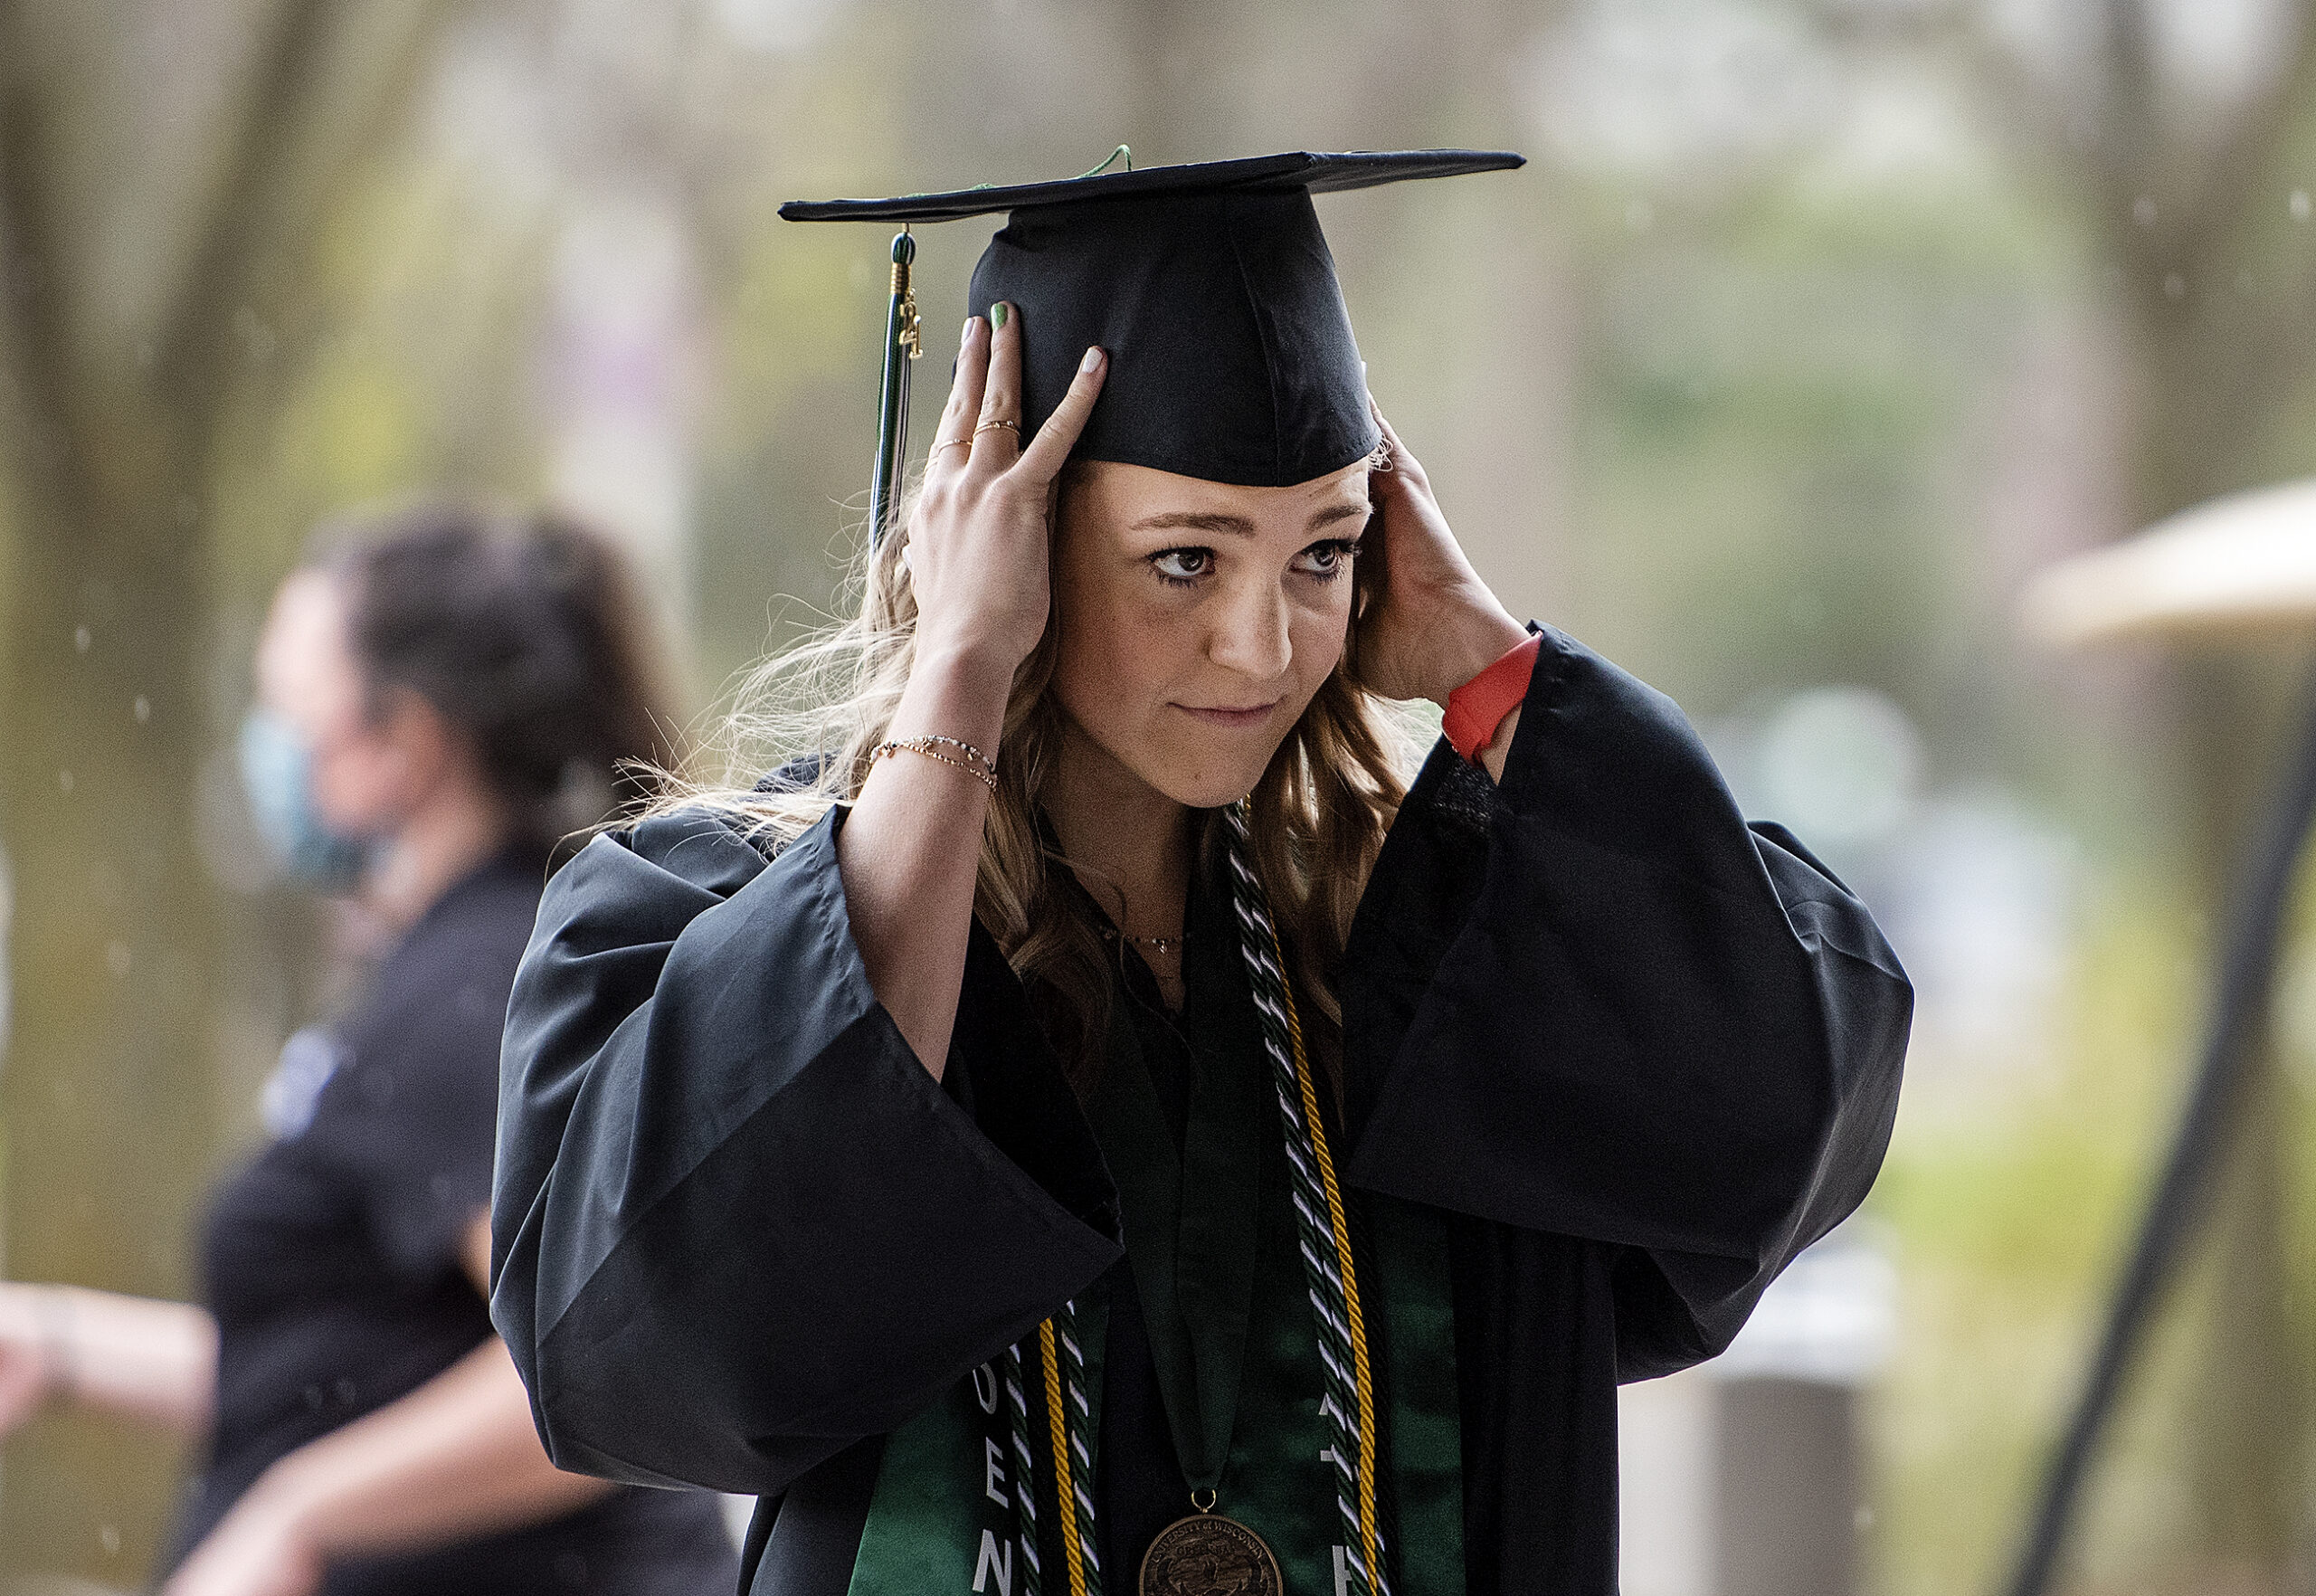 AUW-Green Bay graduate adjusts her cap